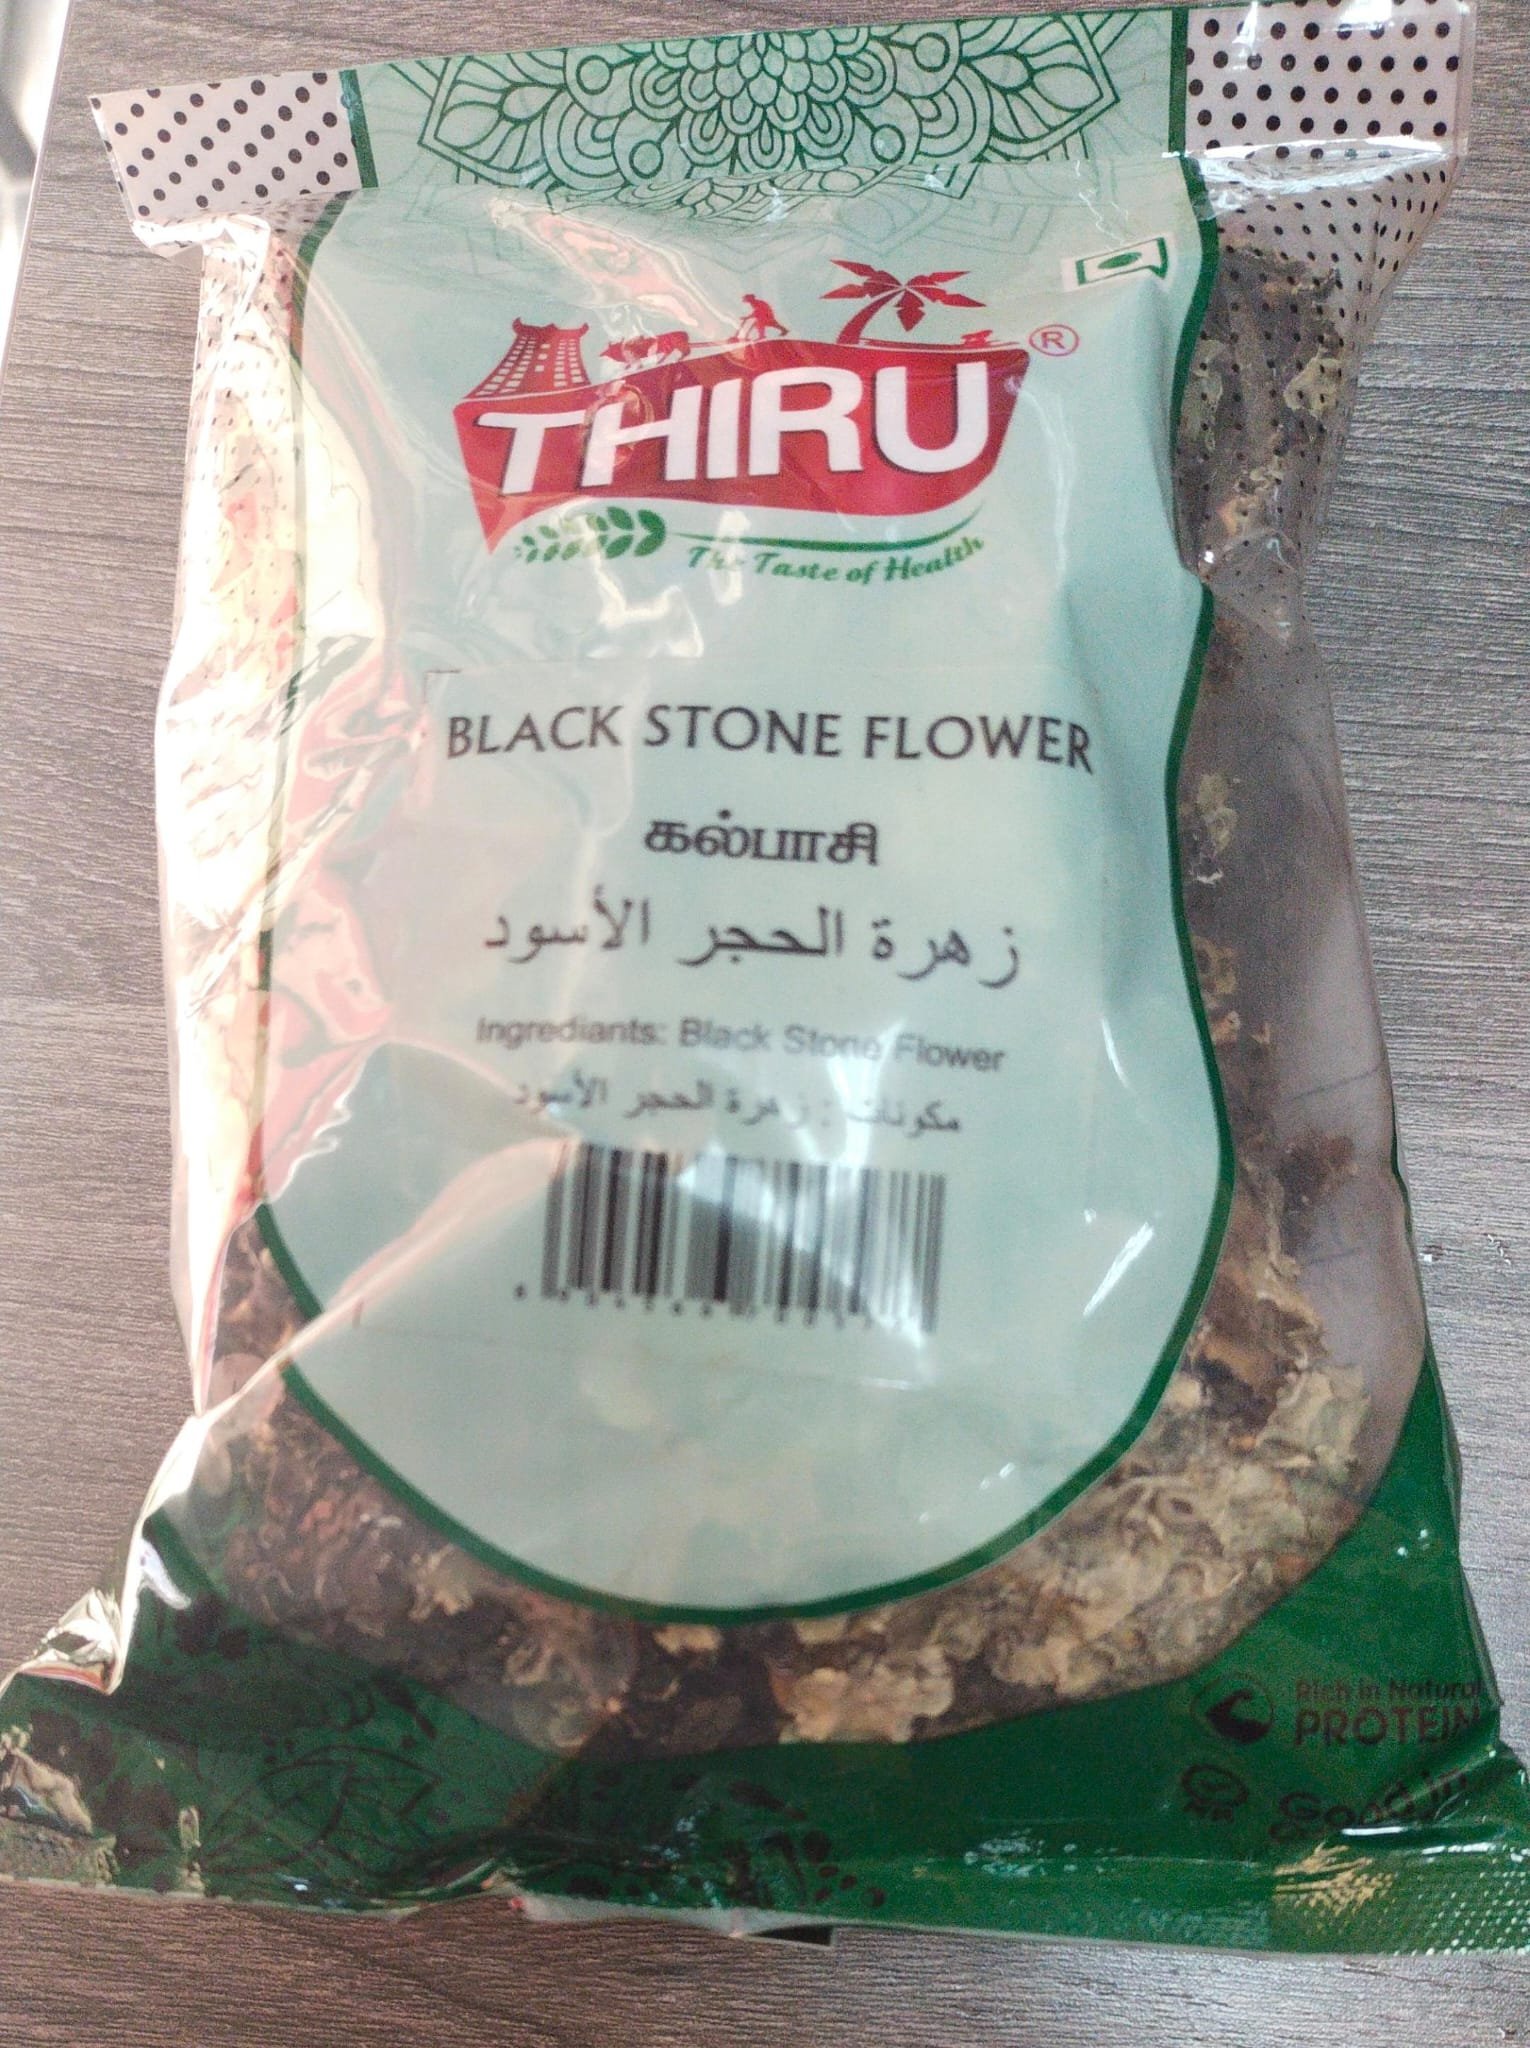 KALPASI (BLACKSTONE FLOWER) THIRU 50G